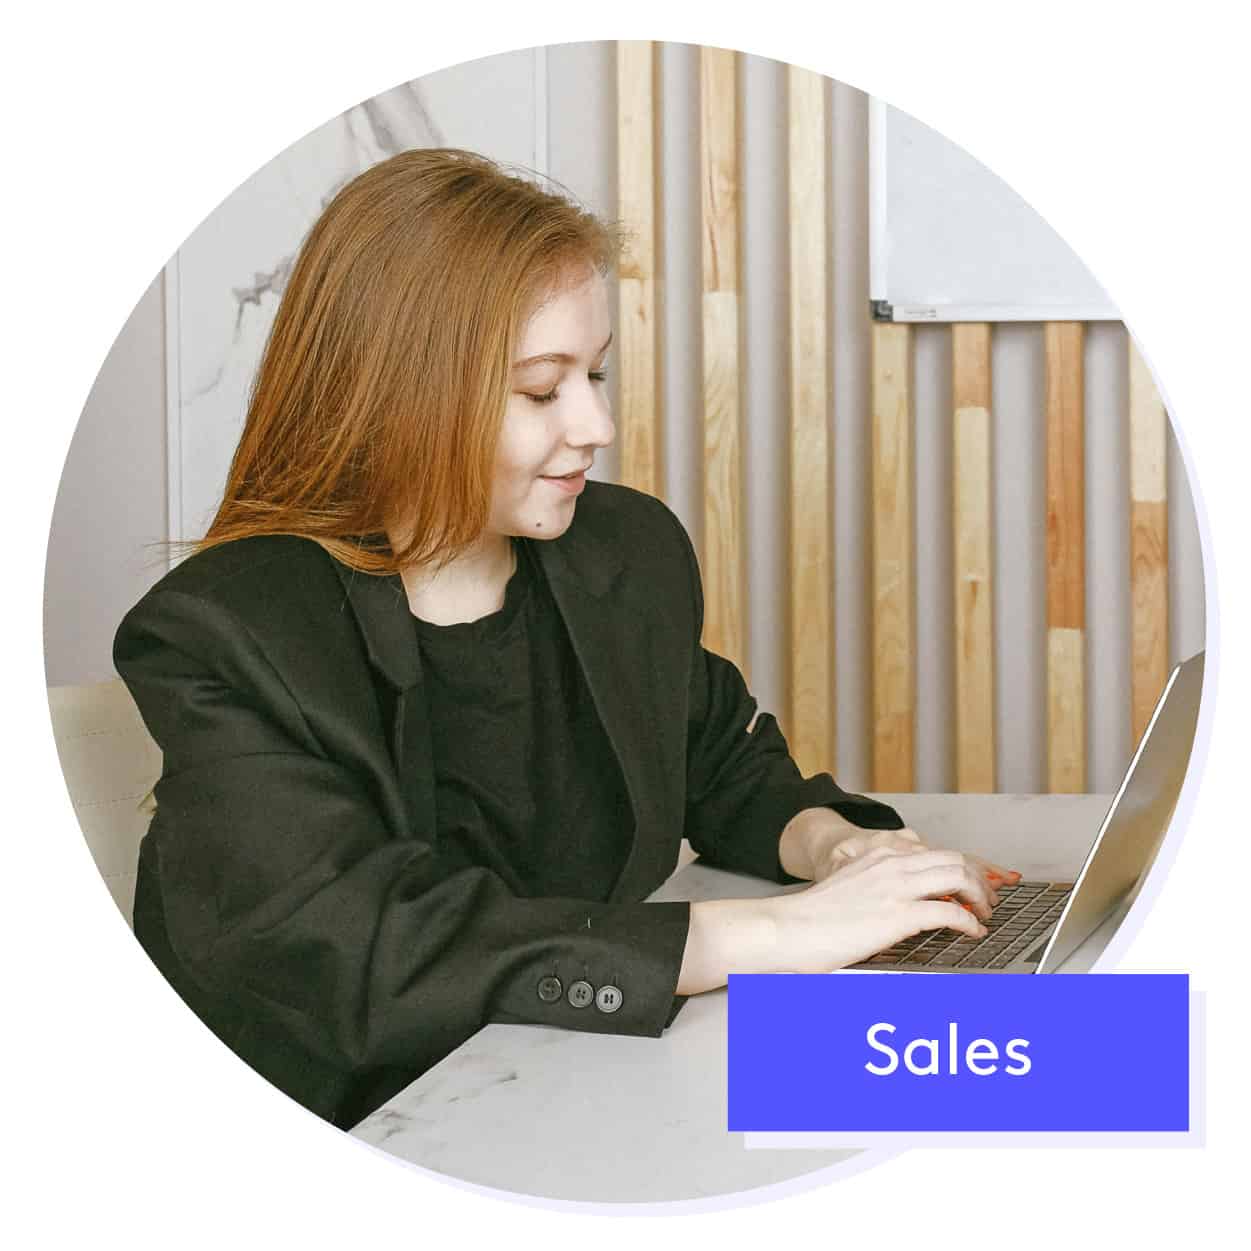 A representative of your sales team.